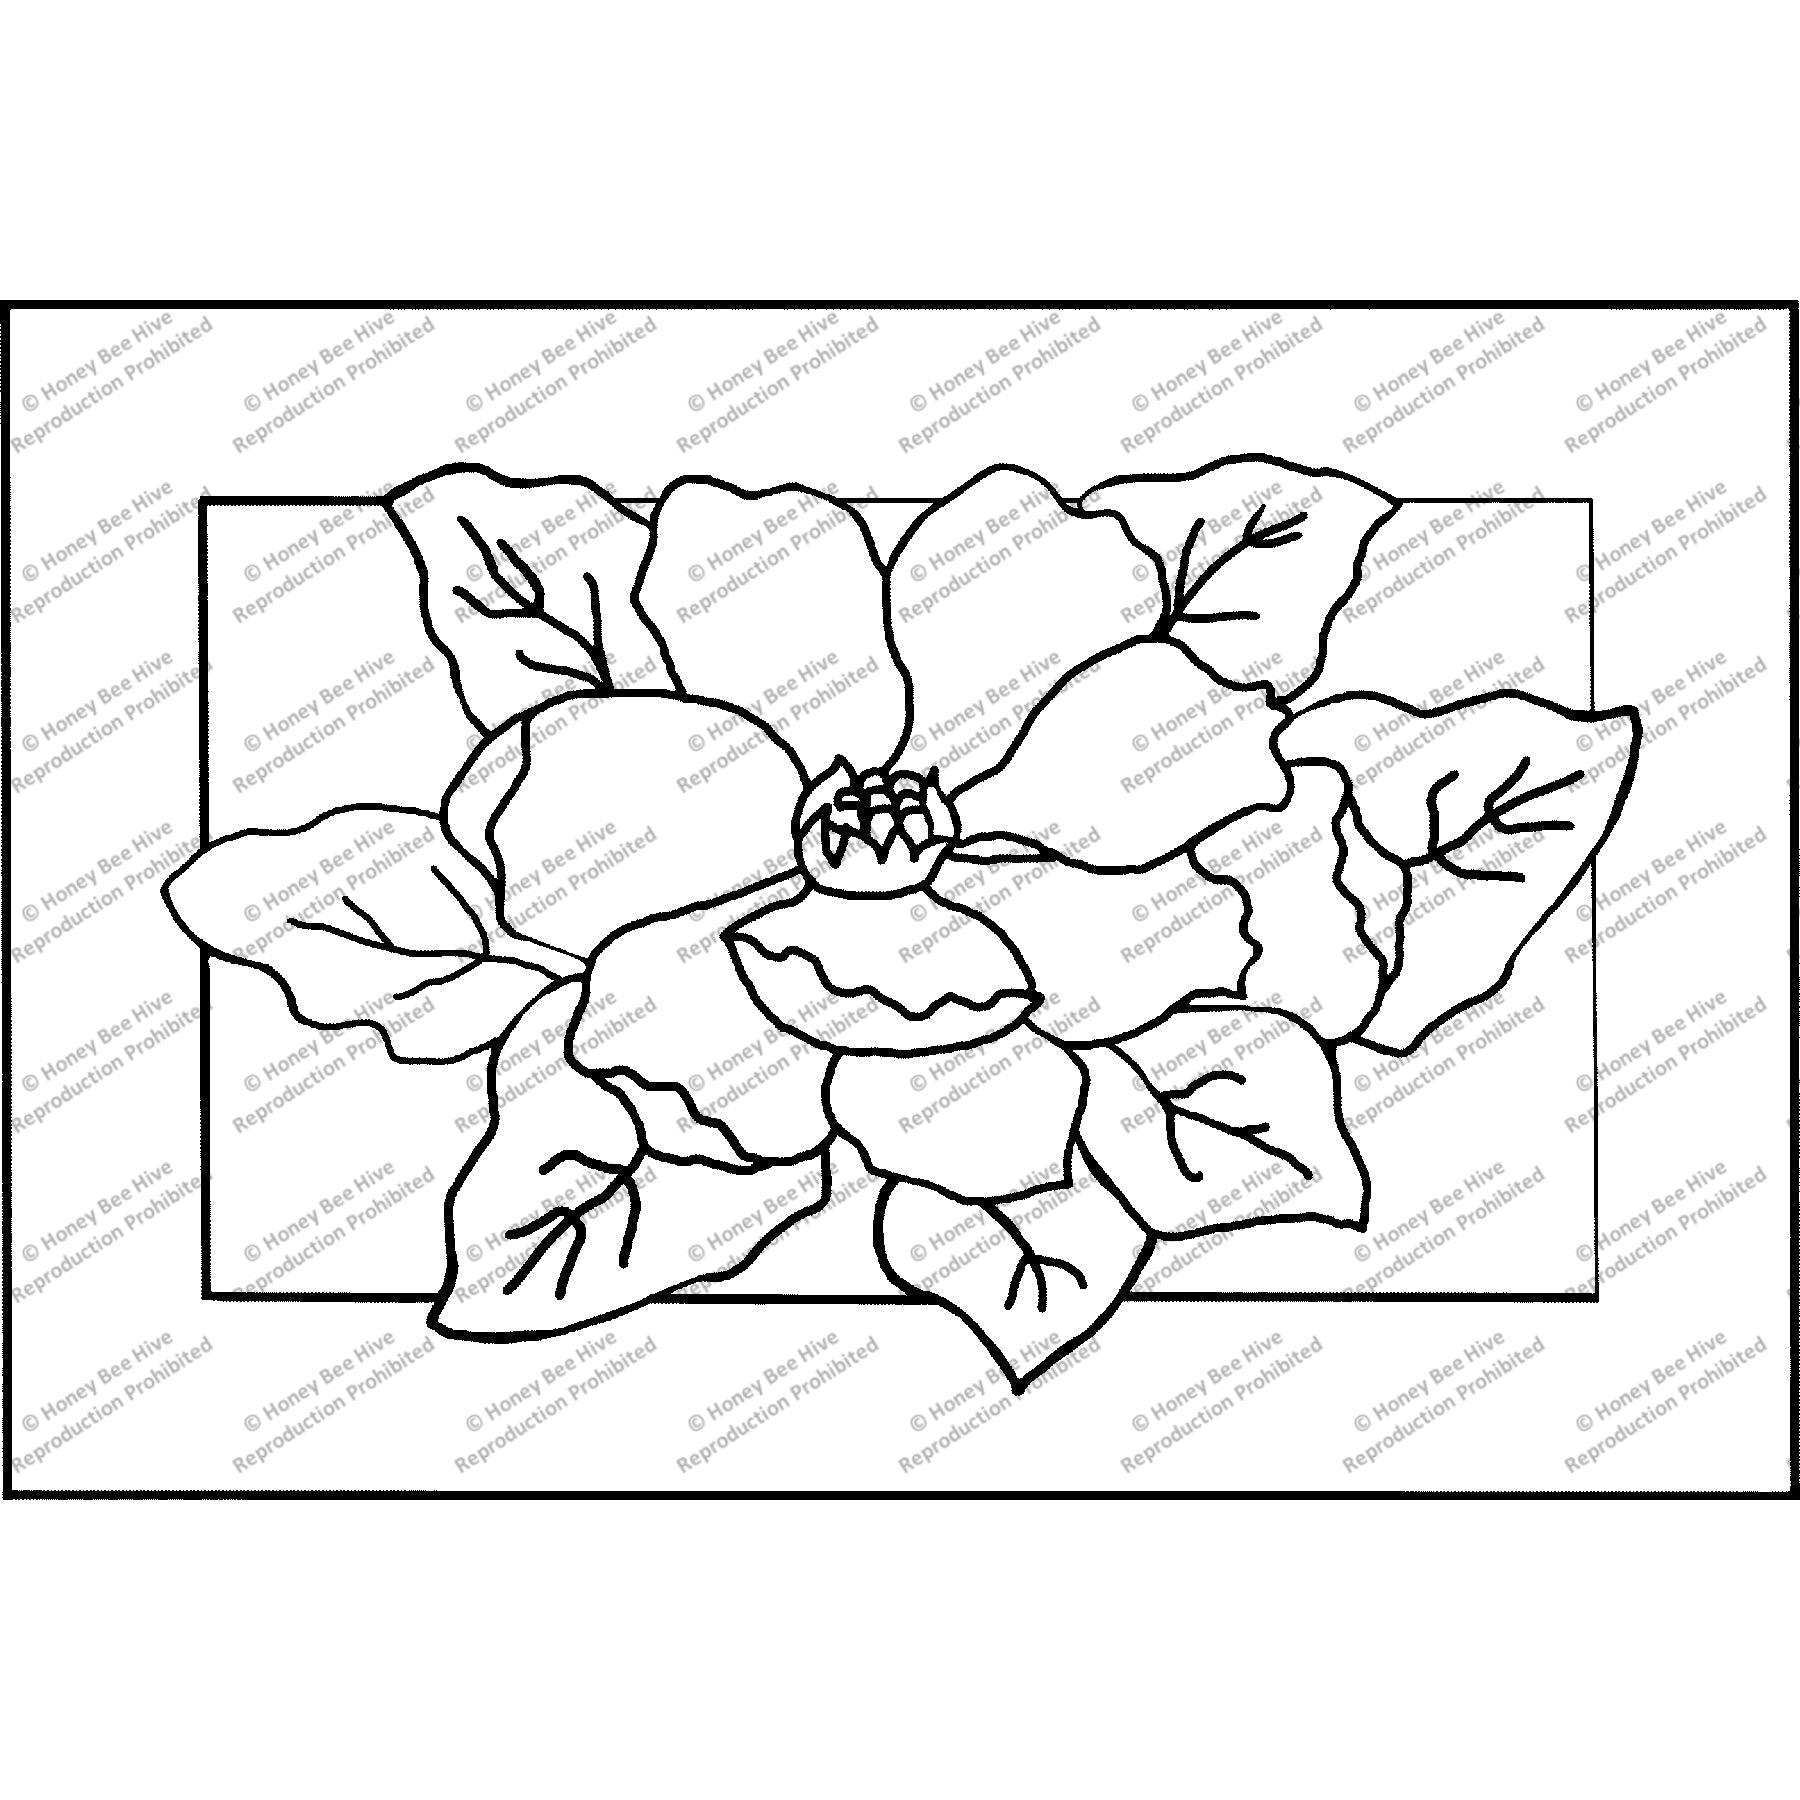 Magnolia, rug hooking pattern